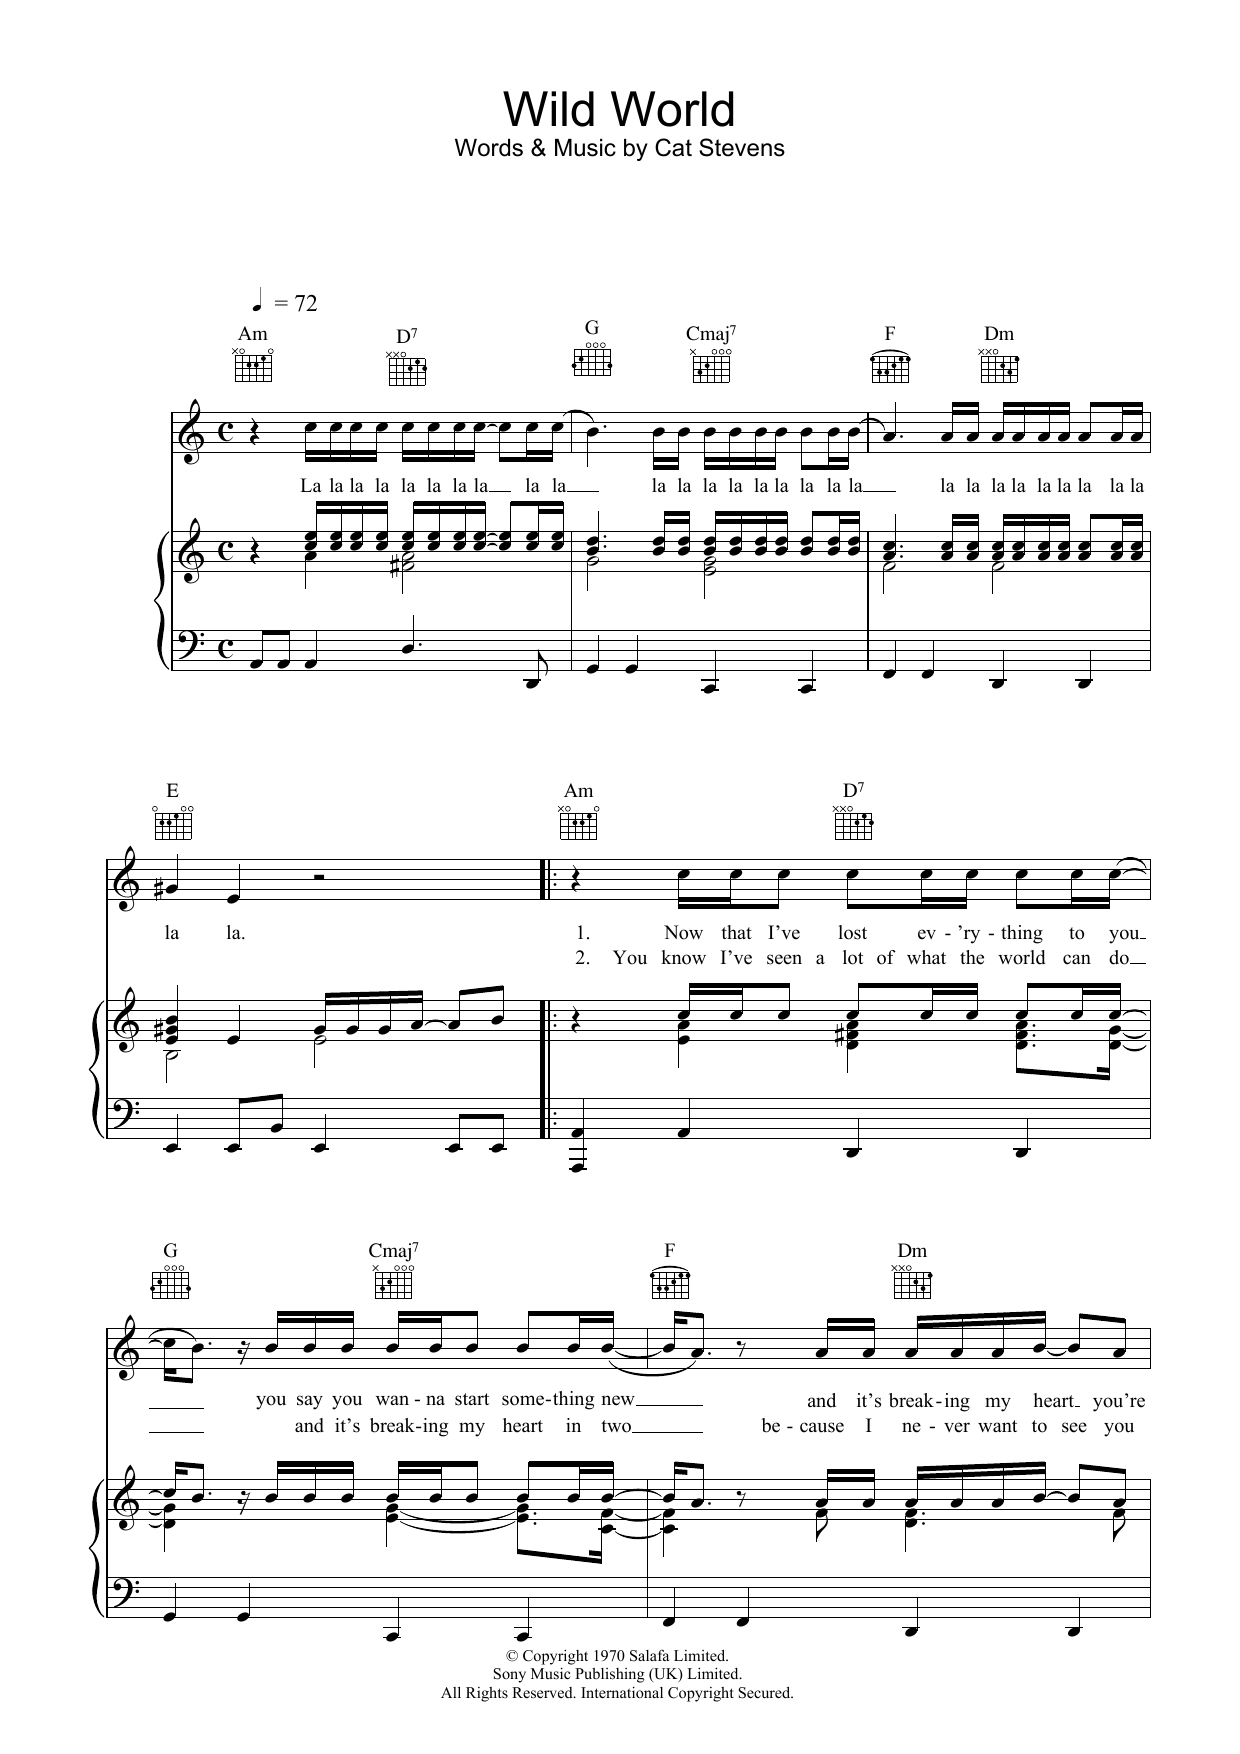 Cat Stevens Wild World Sheet Music Notes & Chords for Baritone Ukulele - Download or Print PDF